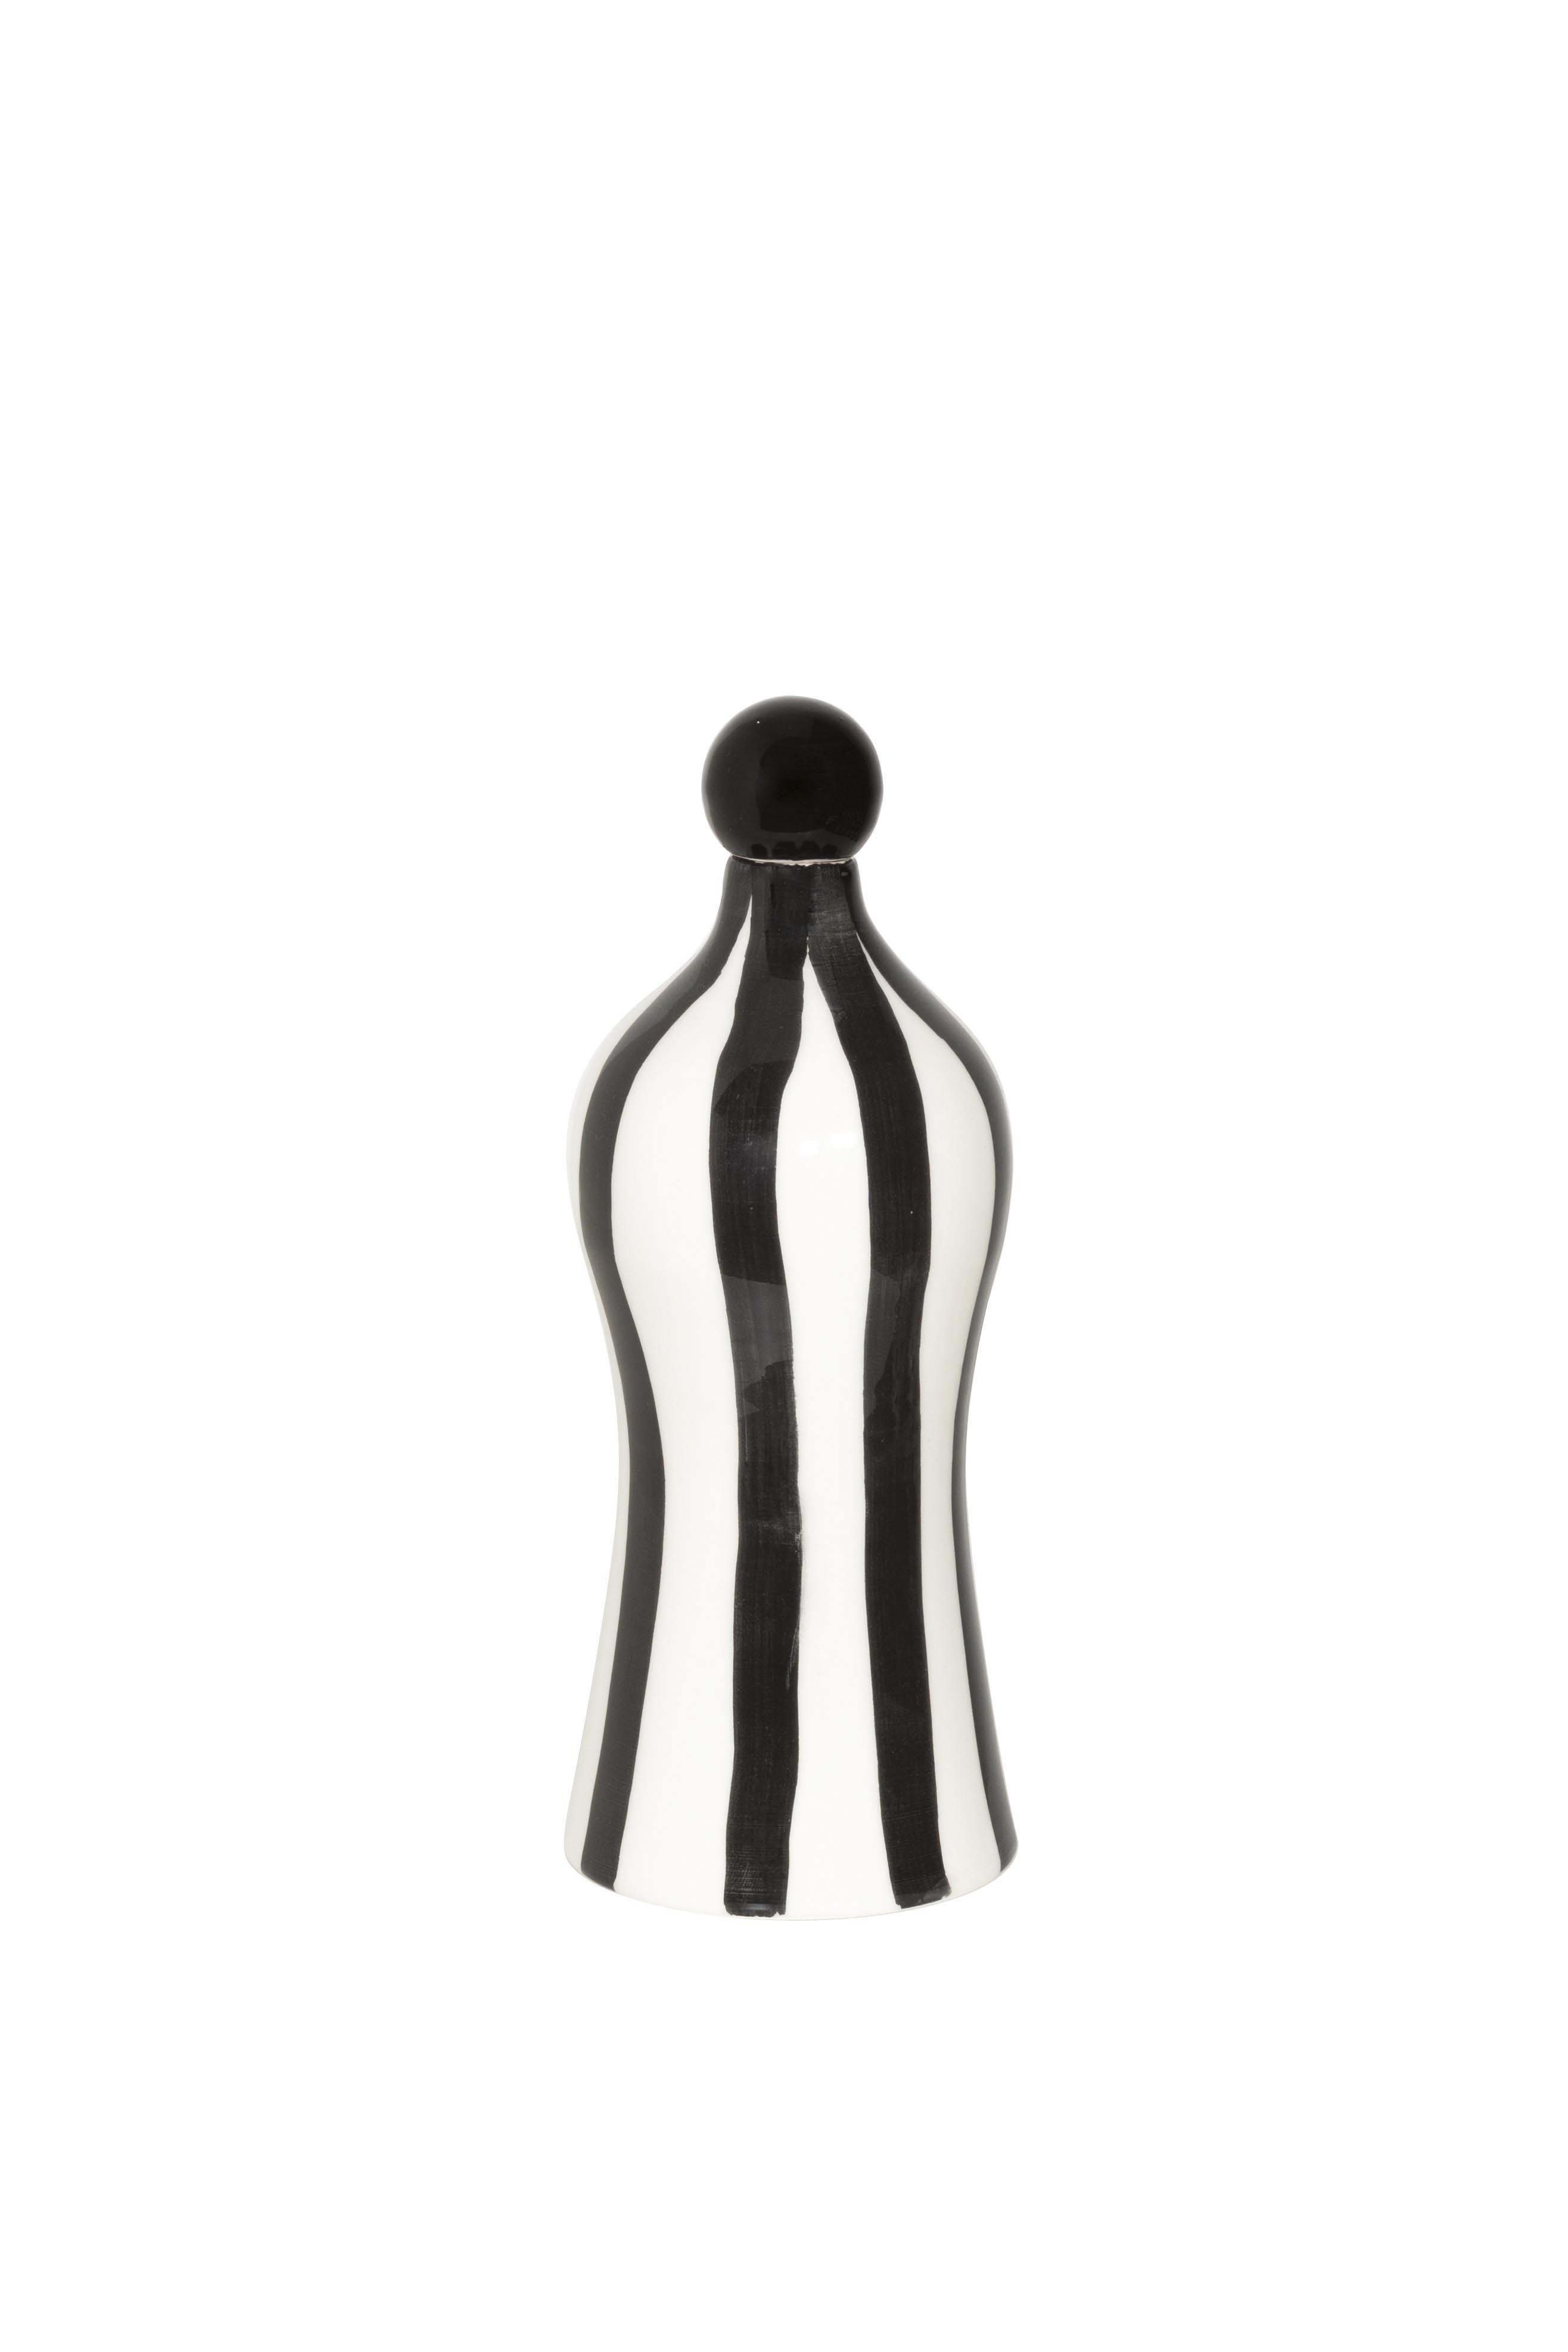 Zafferano Poldina Stopper Bianco / White + Lido Keramik Flasche mit vertikalen Streifen in schwarz